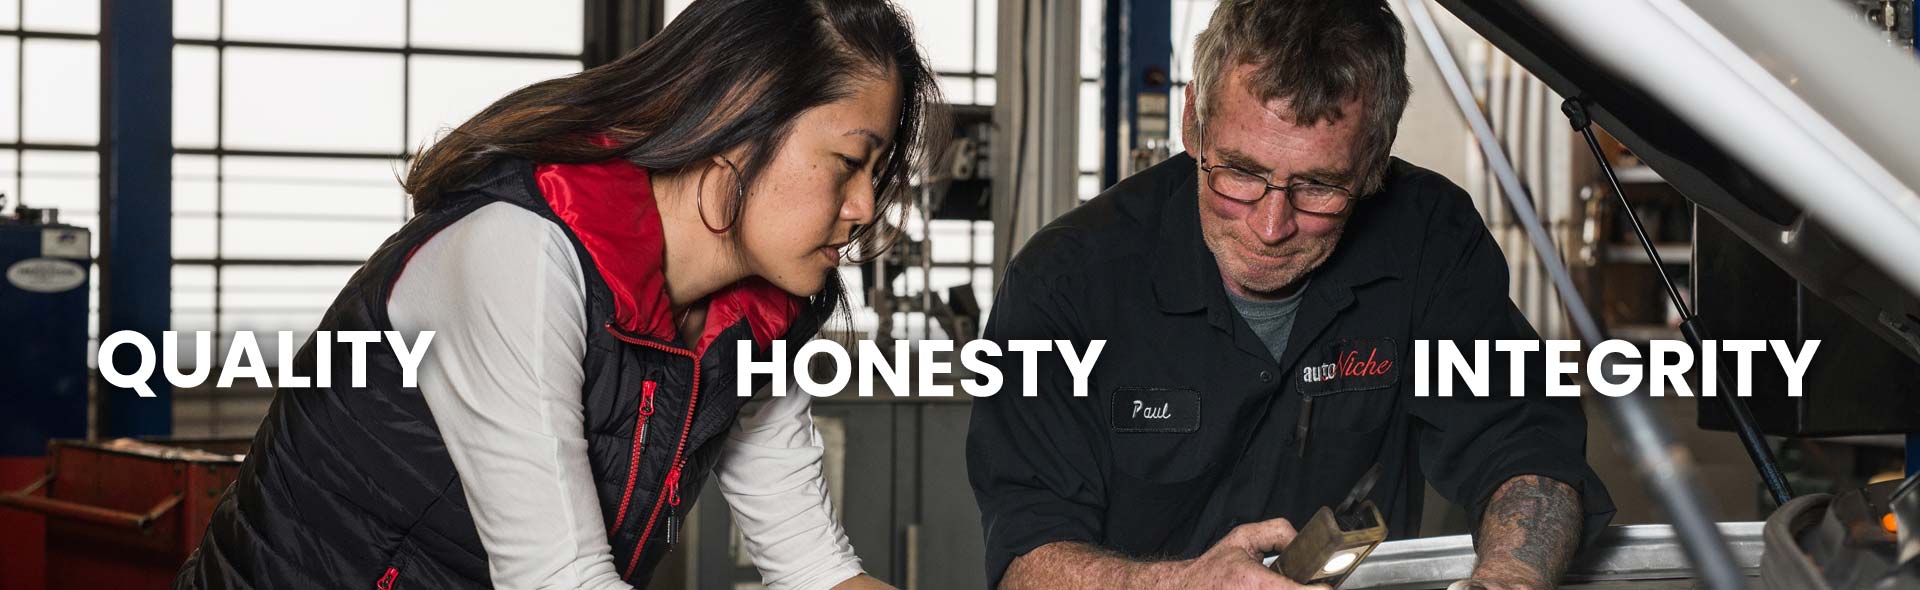 quality honesty integrity